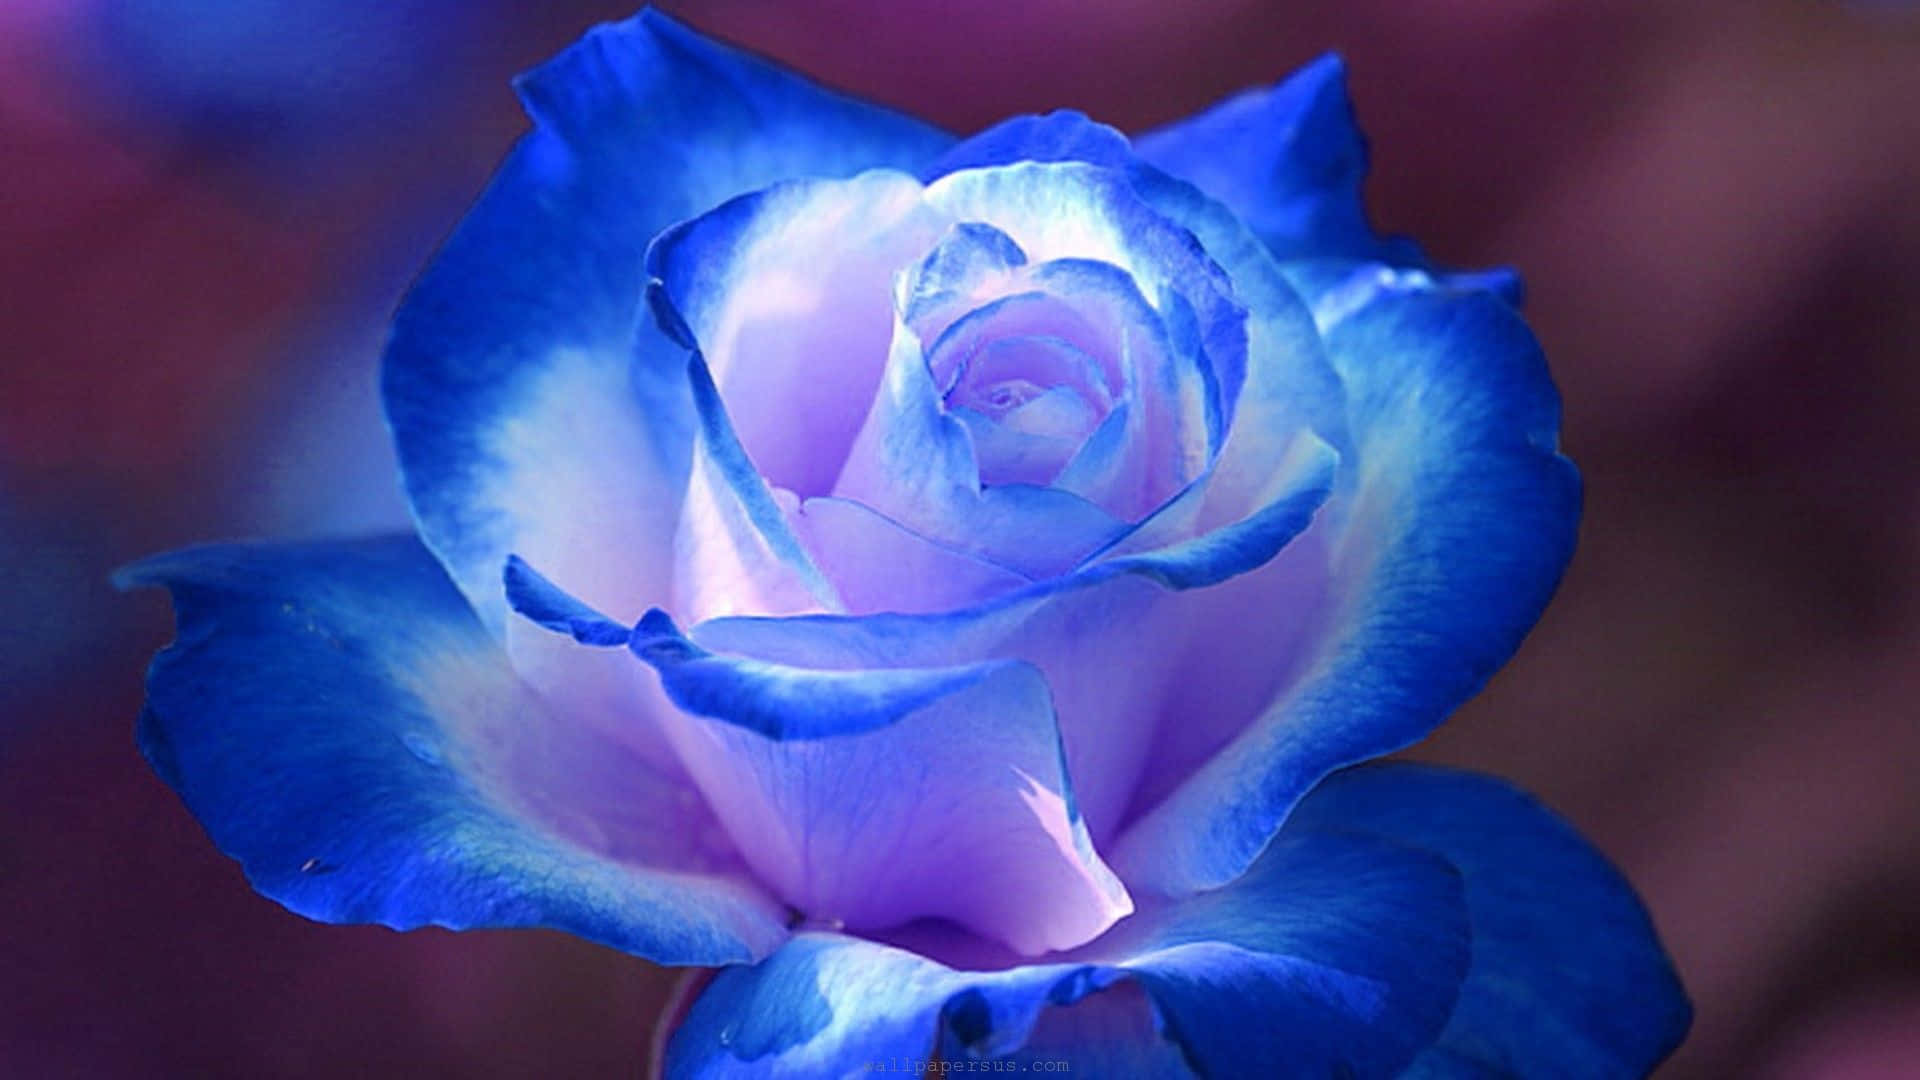 Caption: Mystical Blue Rose Background